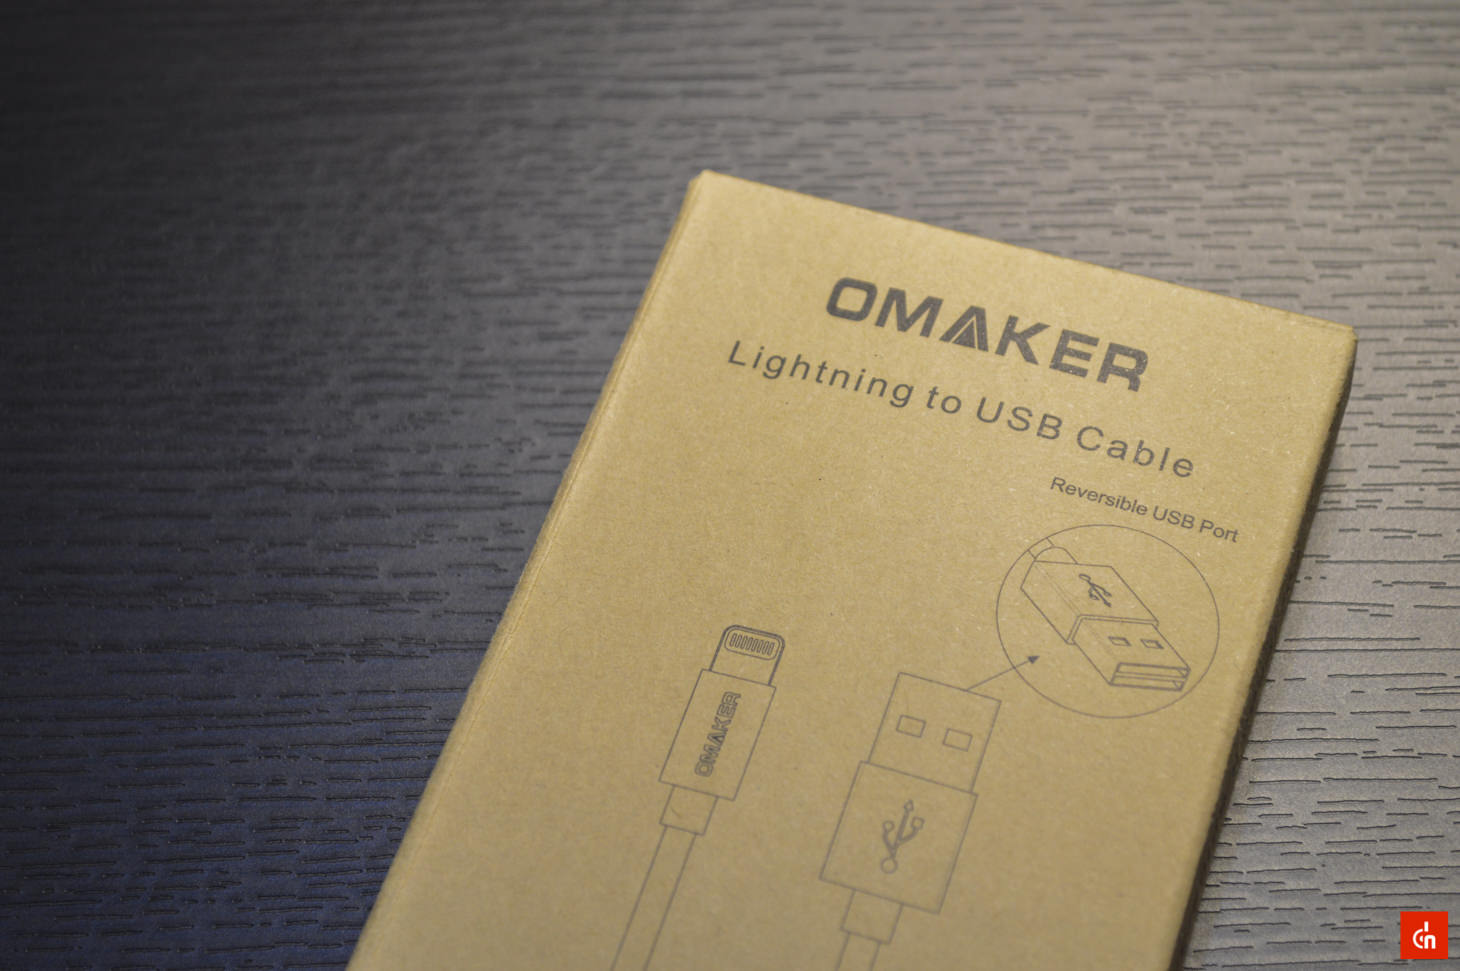 001_20160605_Lightning-cable-omaker